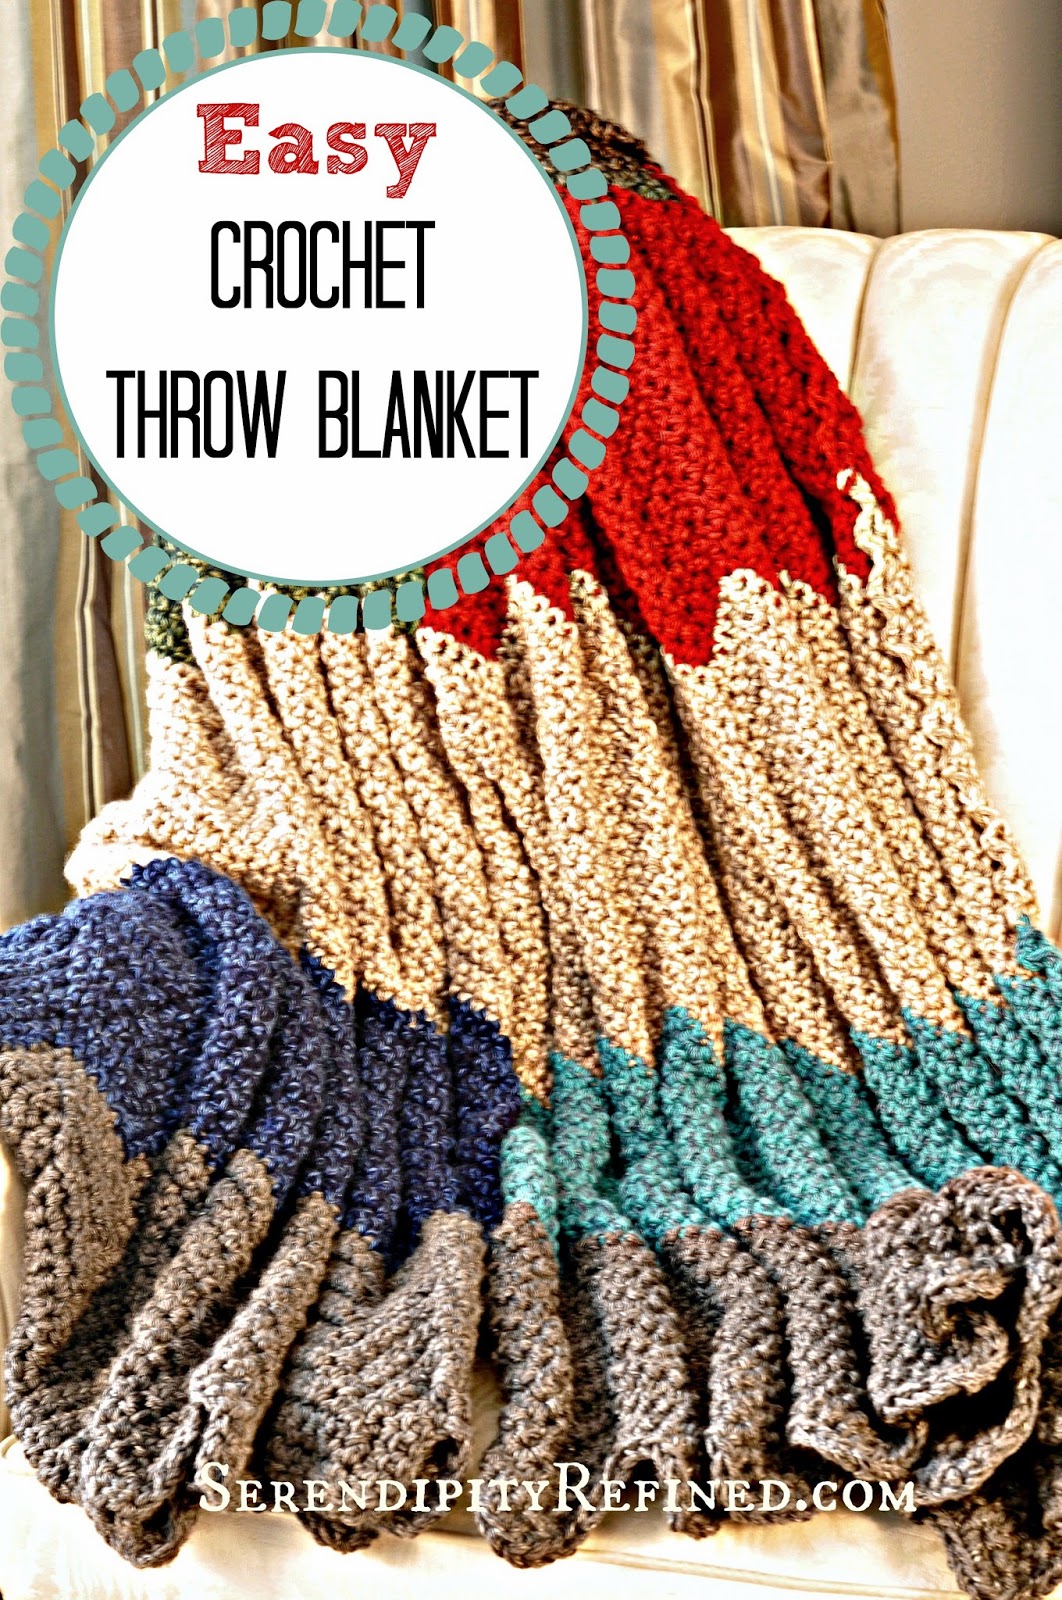 Serendipity Refined Blog: Easy Crochet Throw Blanket Pattern